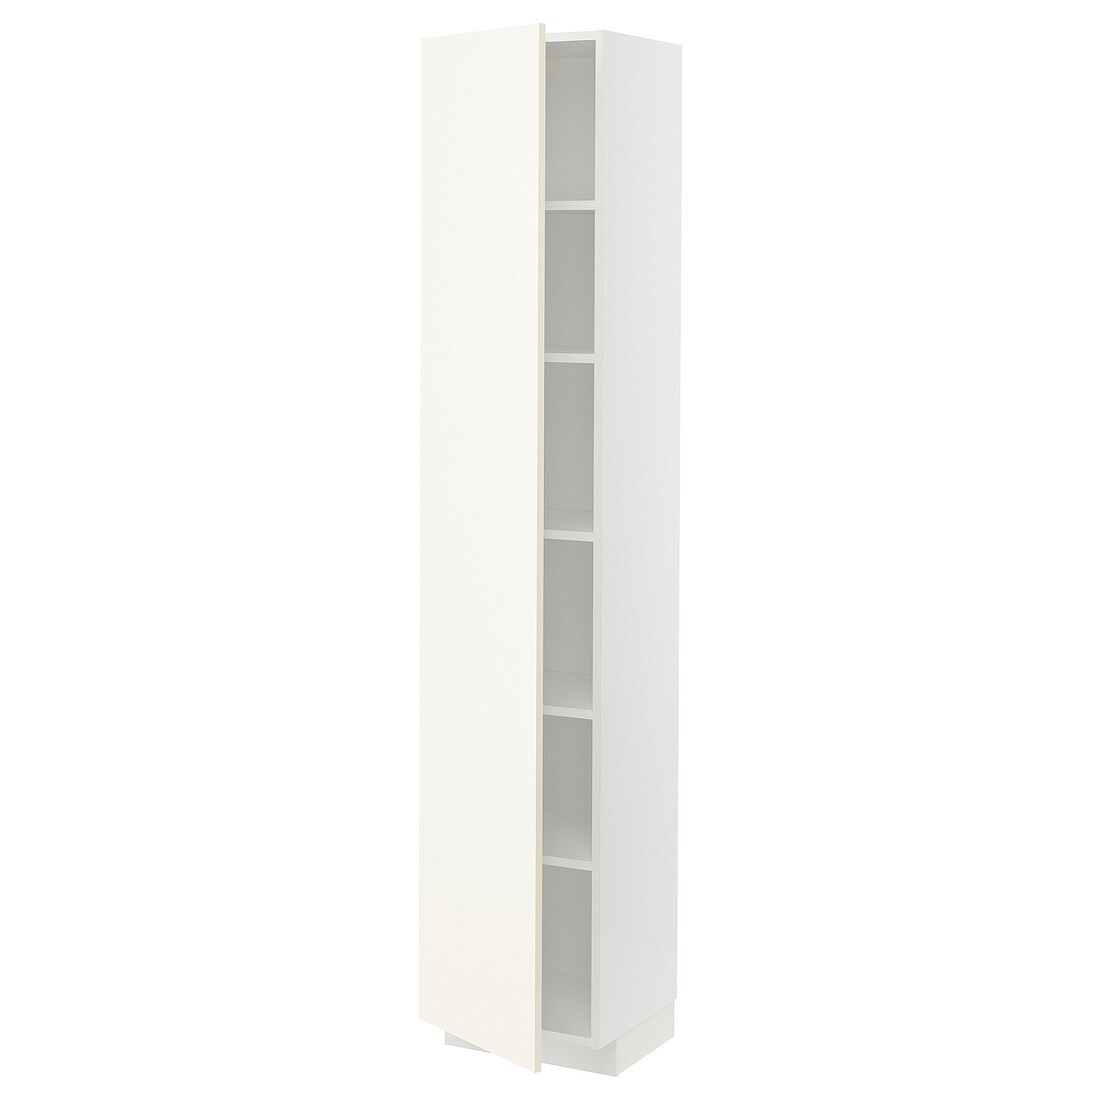 IKEA METOD МЕТОД Высокий шкаф с полками, белый / Vallstena белый 89507312 895.073.12